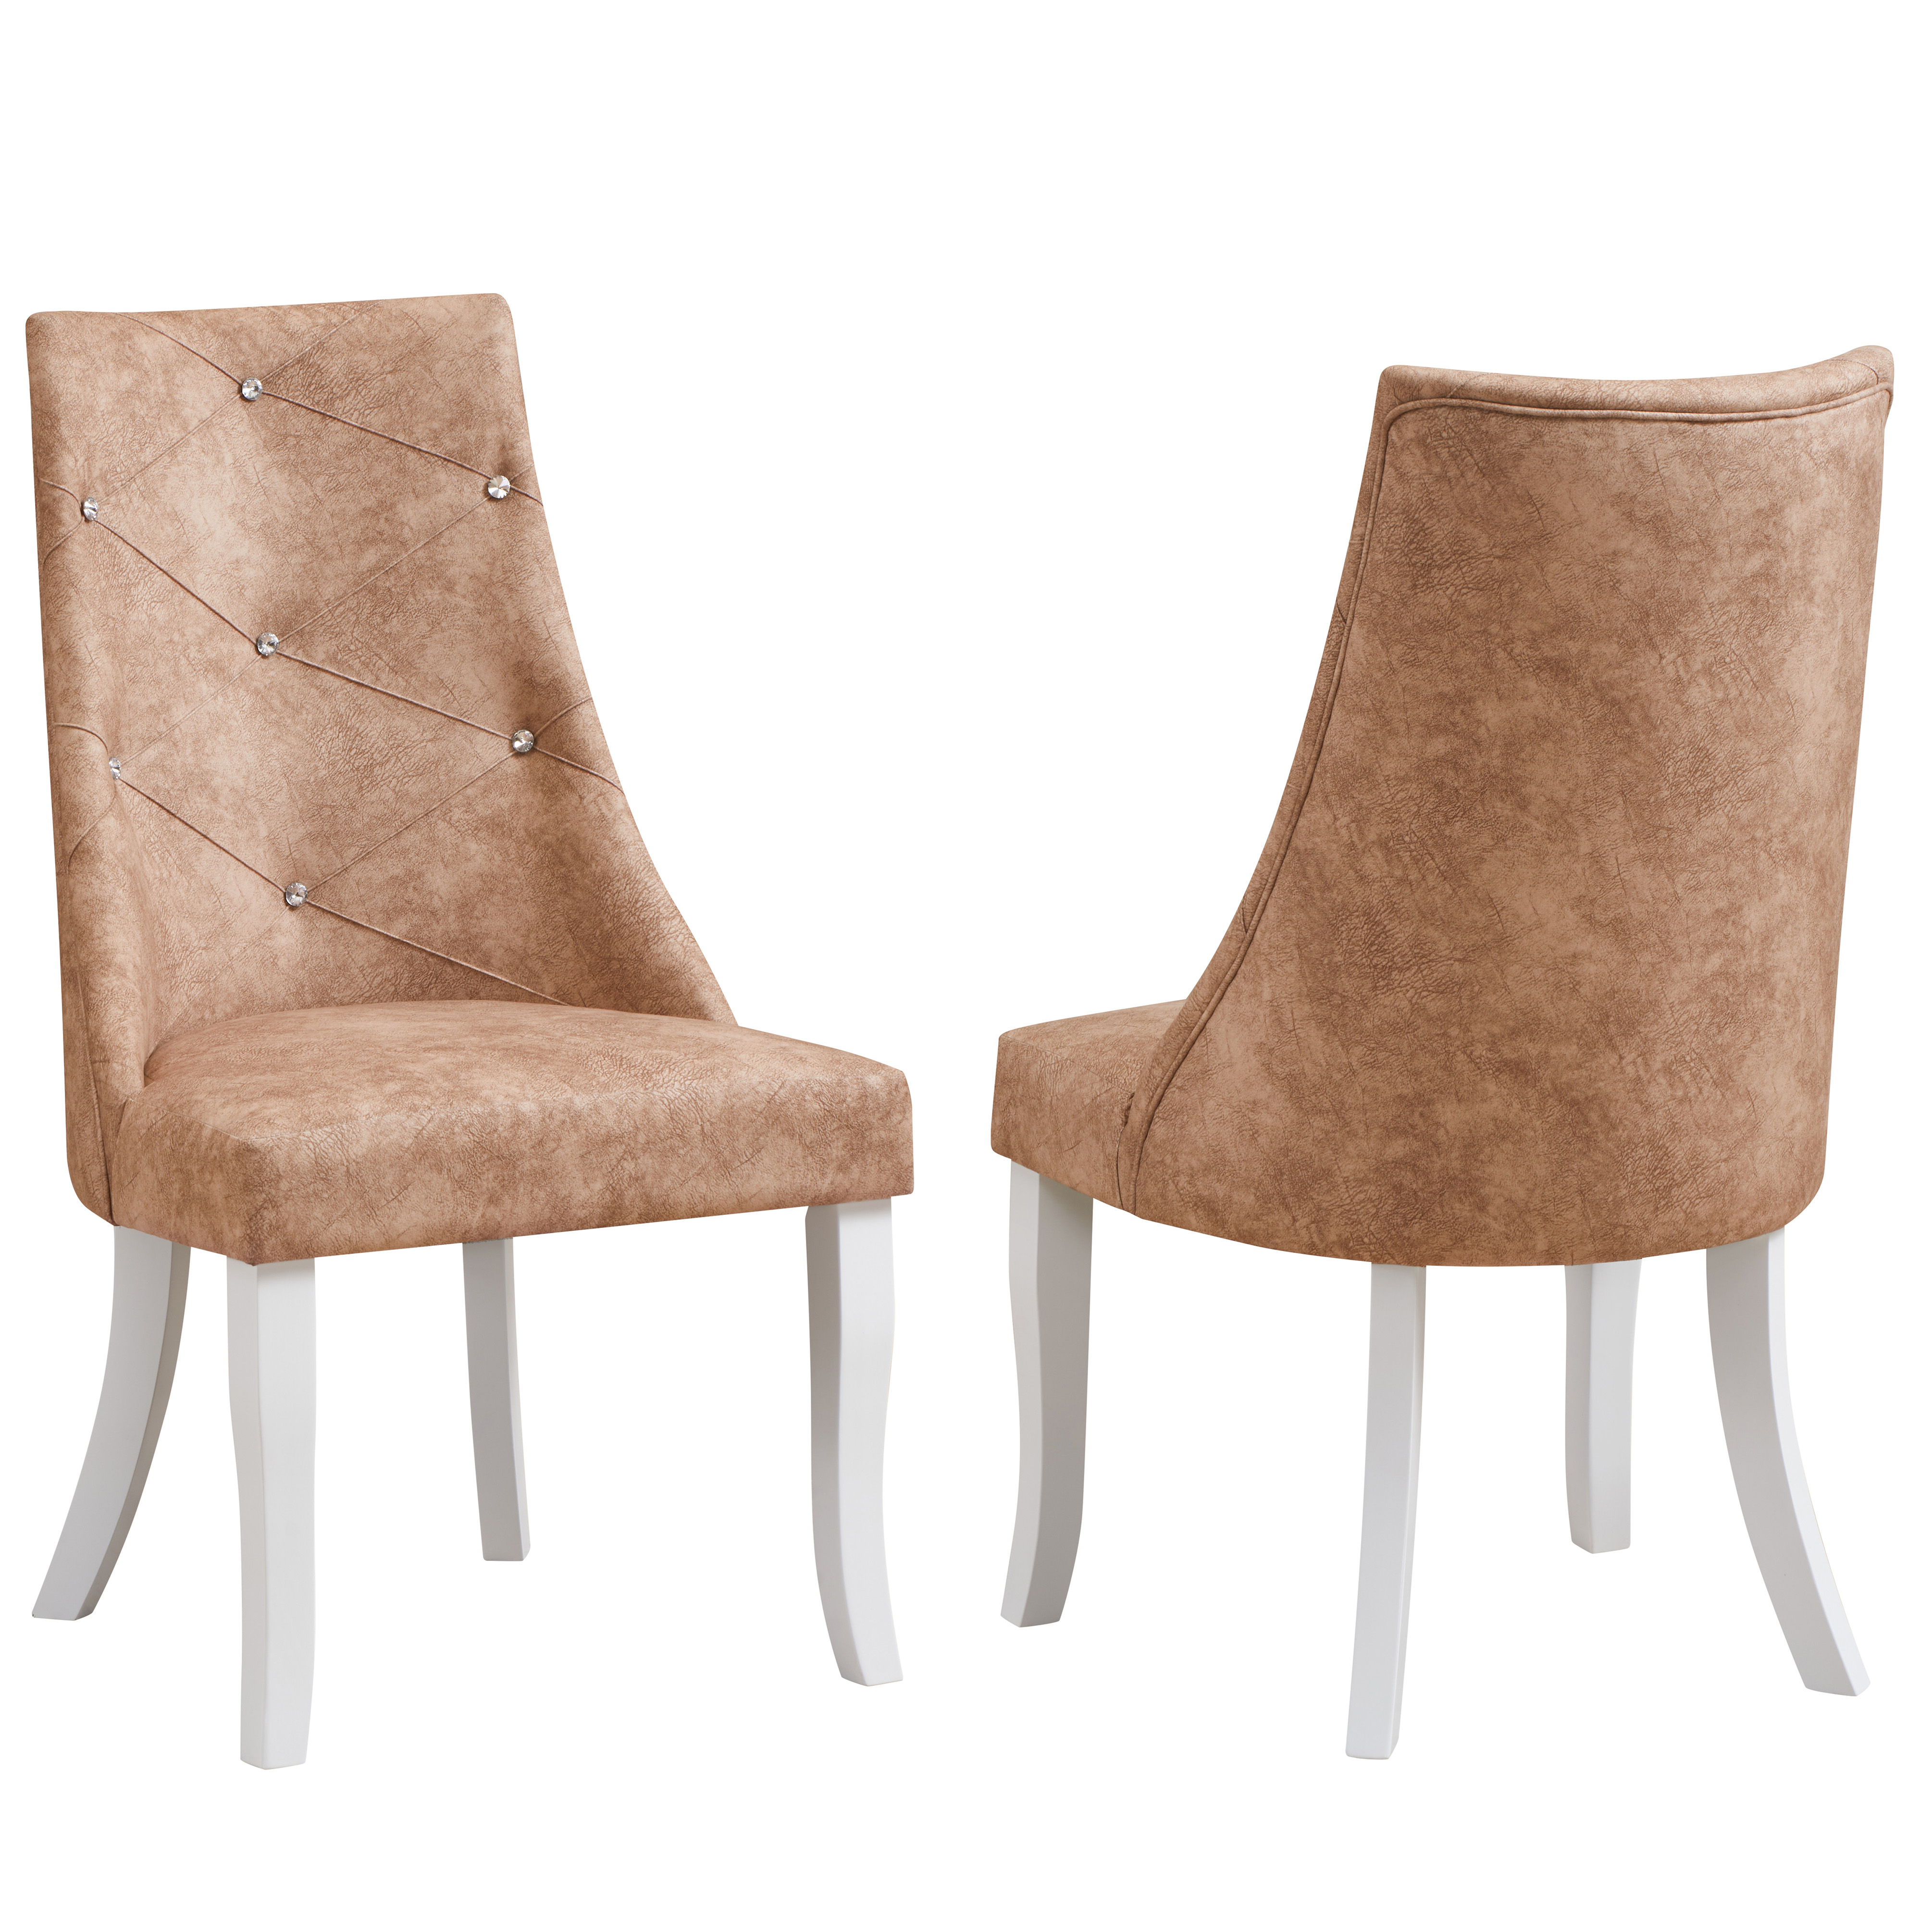 Skyrah Dining Chairs (Light Brown) - Set of 2